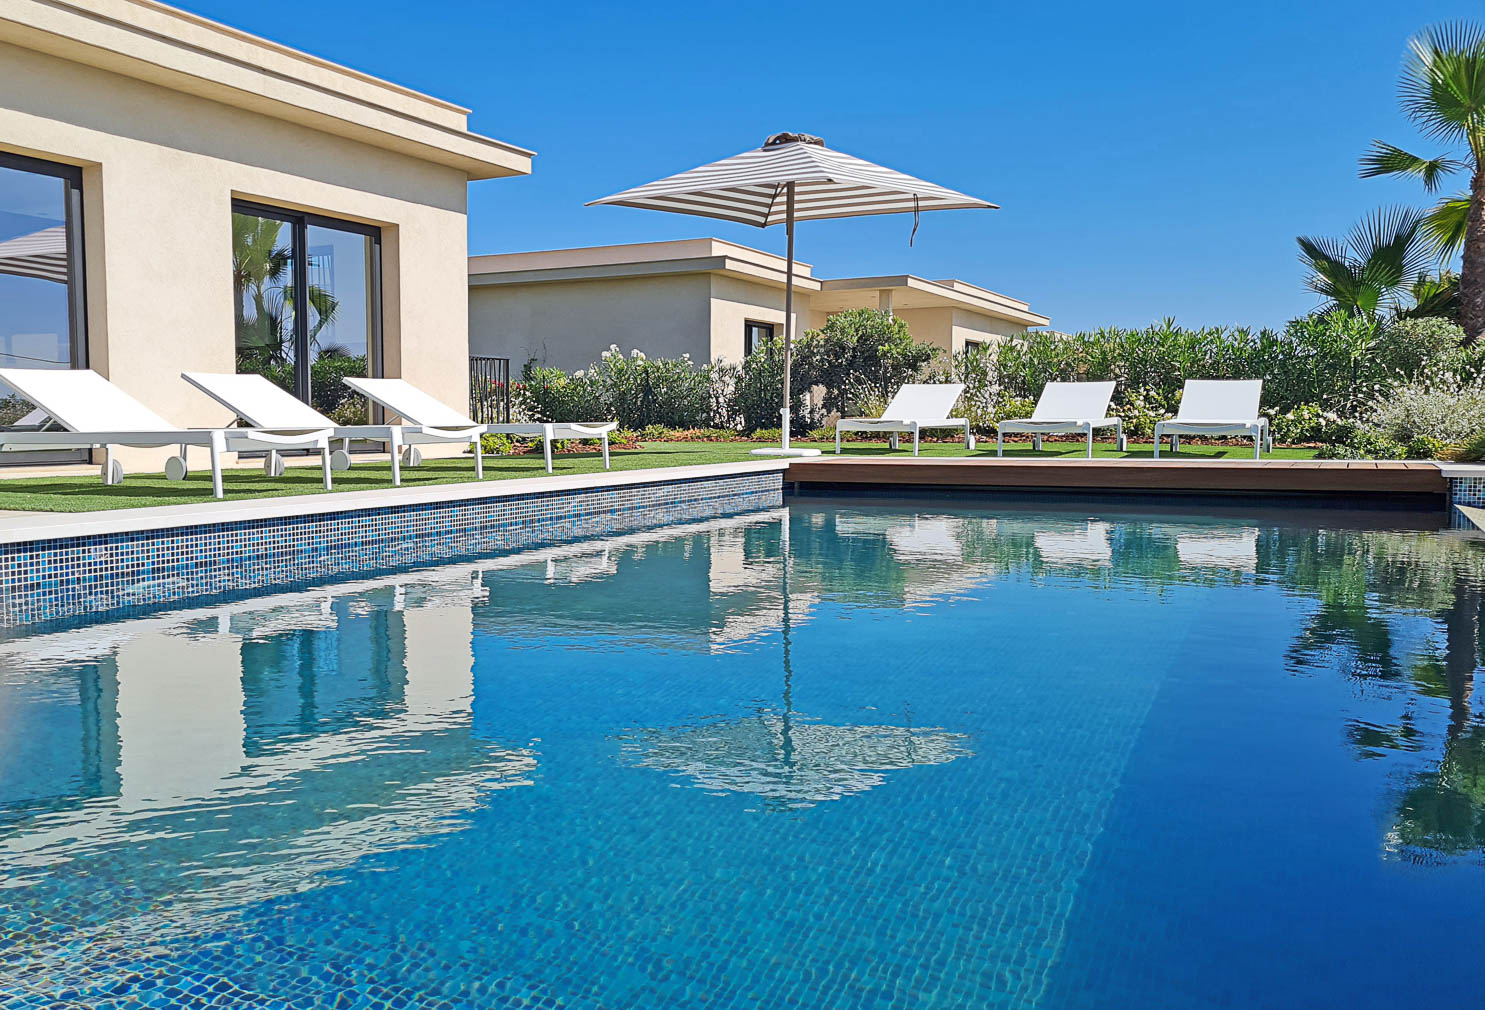 New Luxury Three Bedroom Villa with Private Pool in Gated Estate, Faro